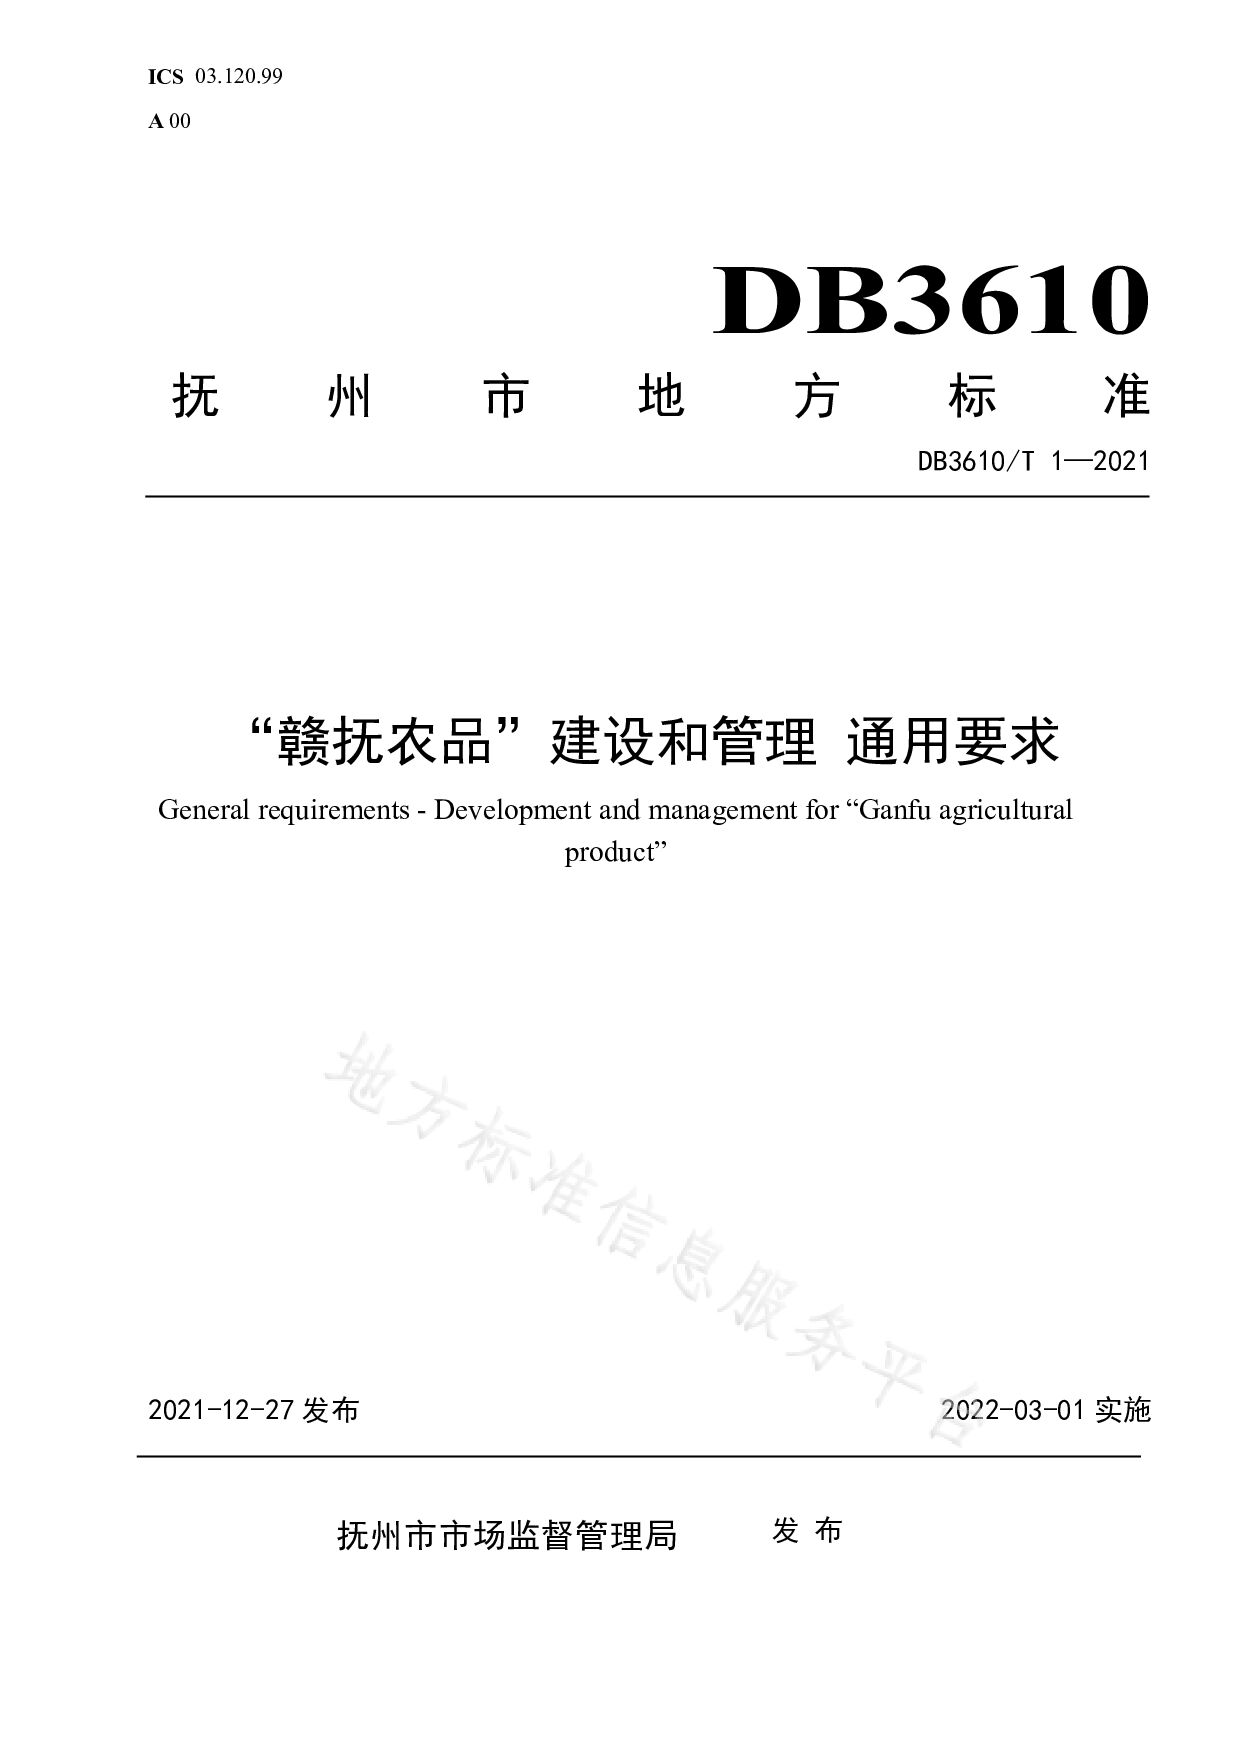 DB3610/T 1-2021